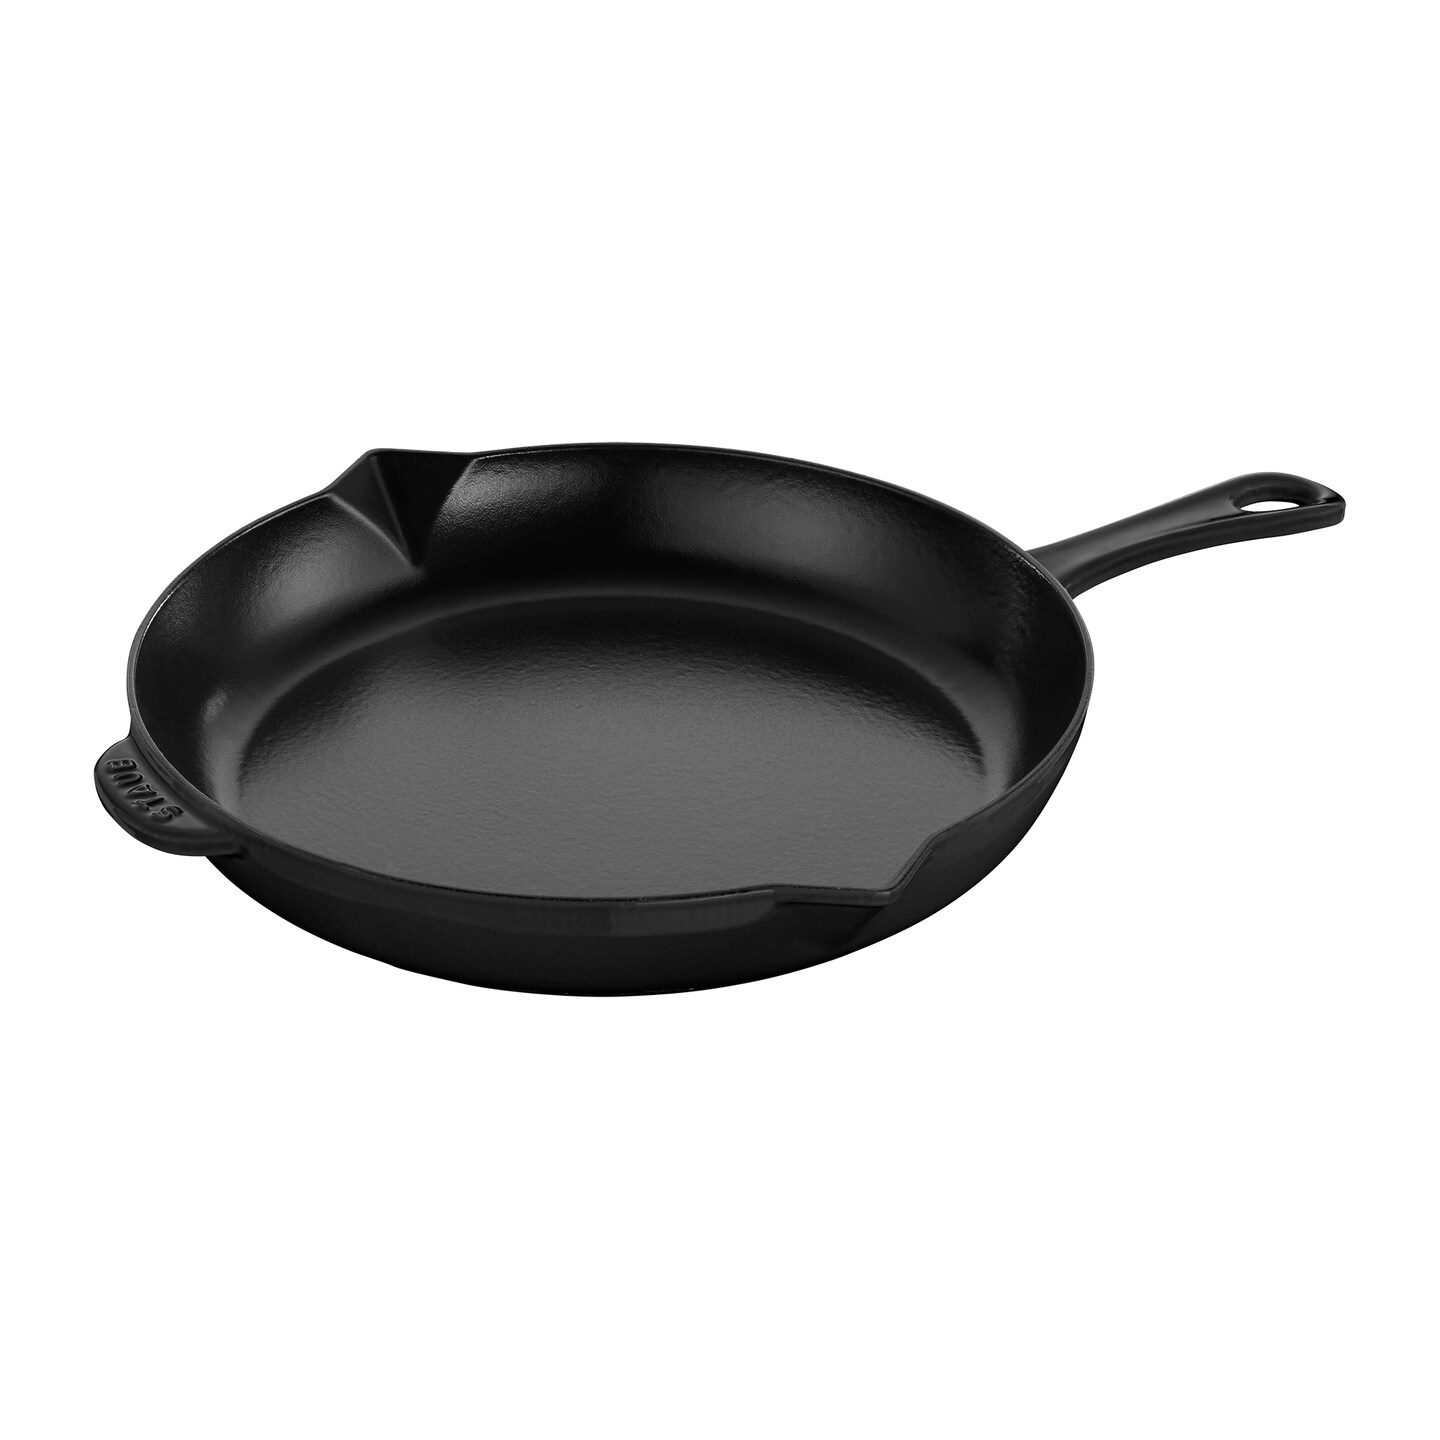 STAUB Cast Iron 12-inch Fry Pan